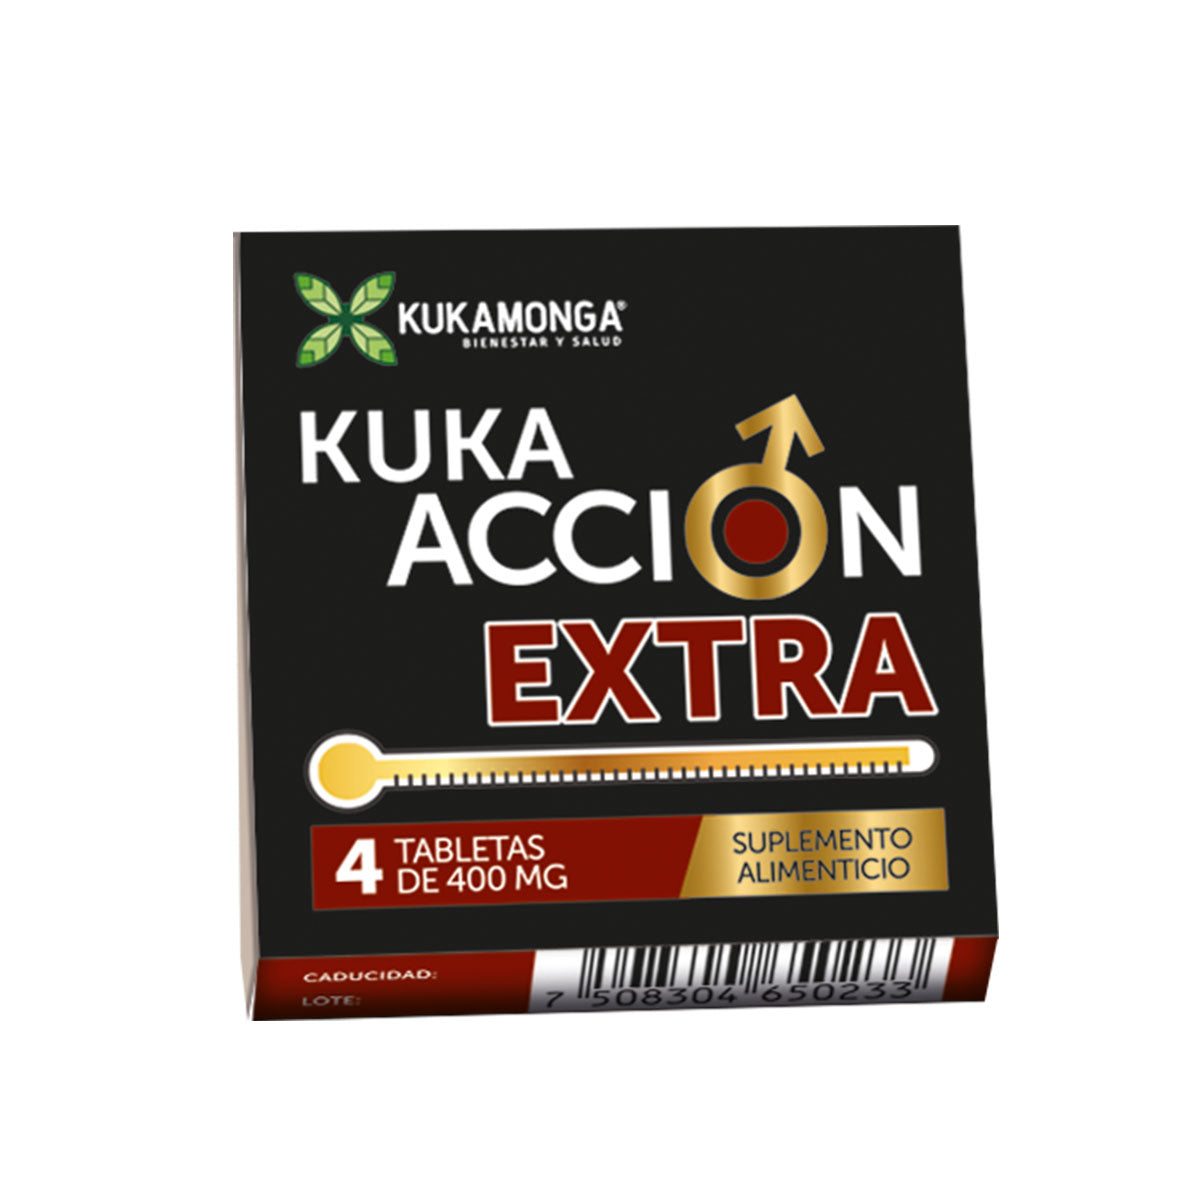 Kuka Acción EXTRA 4 Tabletas de 400 mg Kukamonga